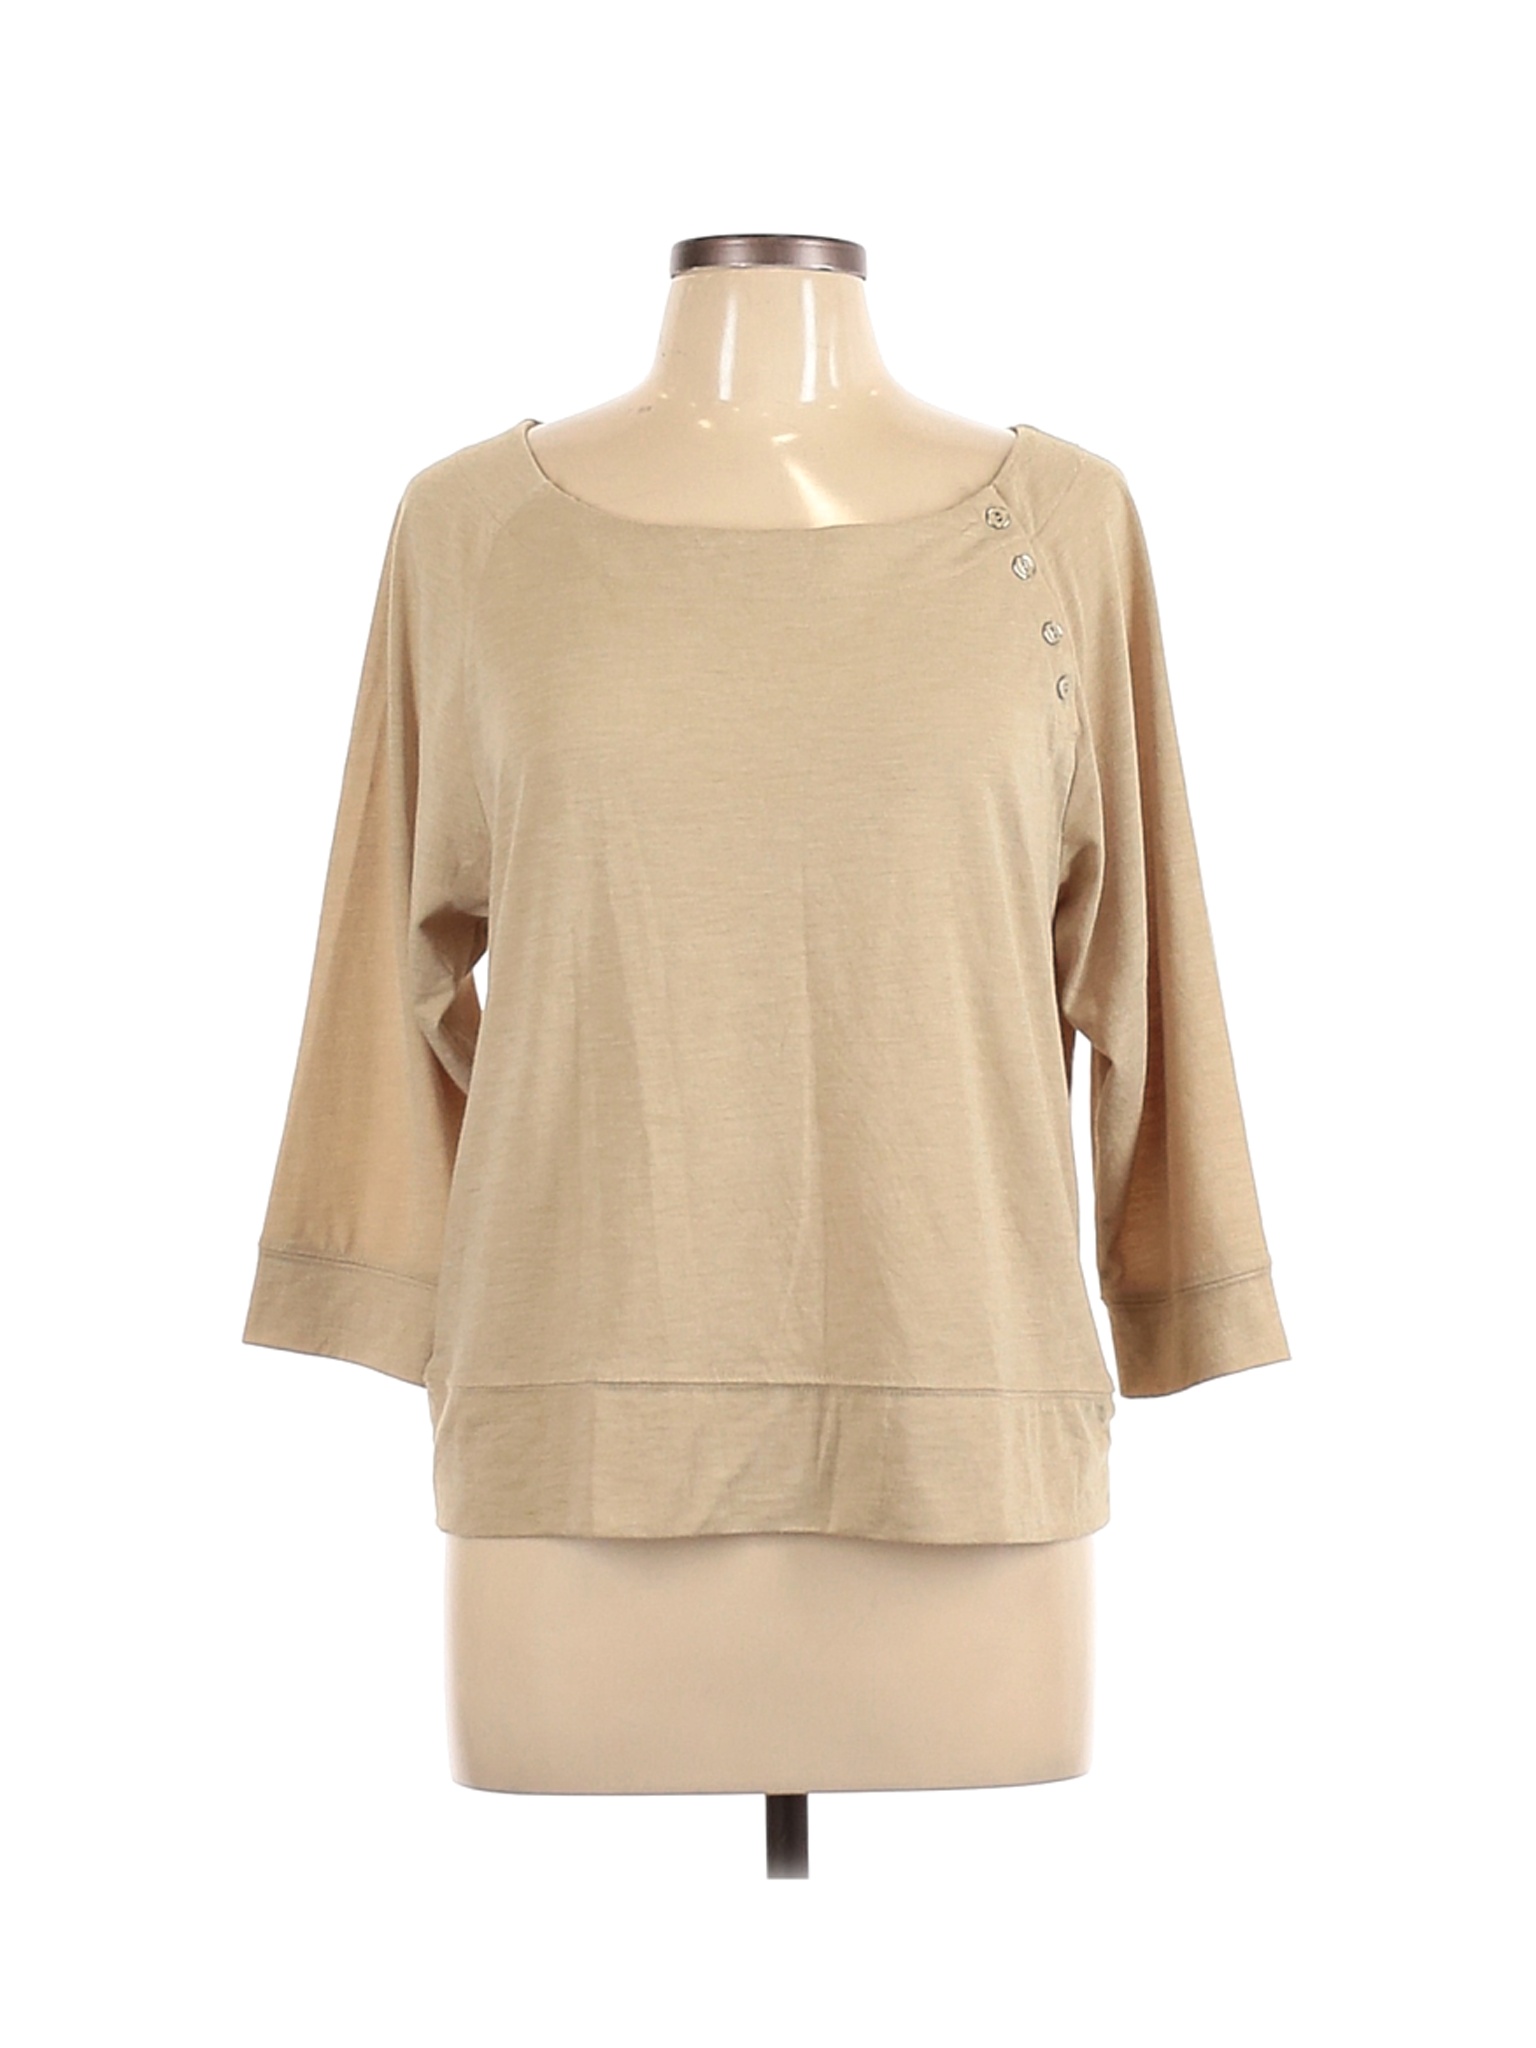 NY&C Women Brown Long Sleeve Top L | eBay